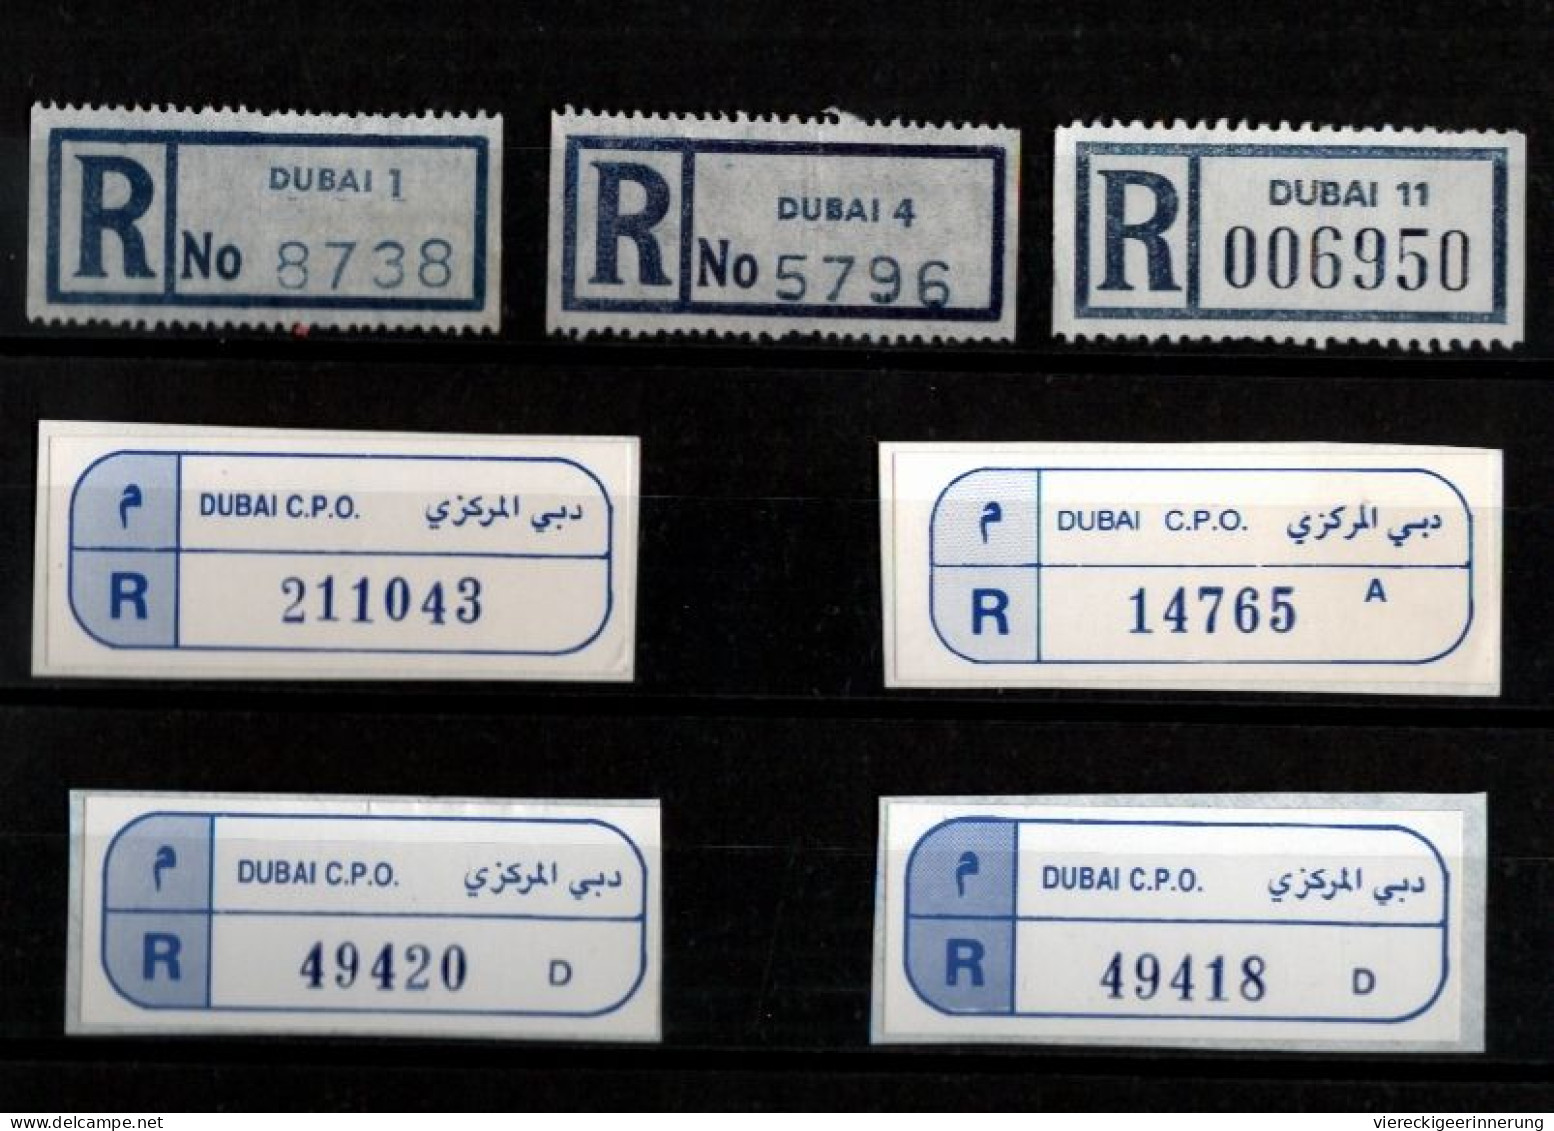 ! 1 Steckkarte Mit 7 R-Zetteln Aus Dubai, UAE, Trucial States, Einschreibzettel, Reco Label - Dubai